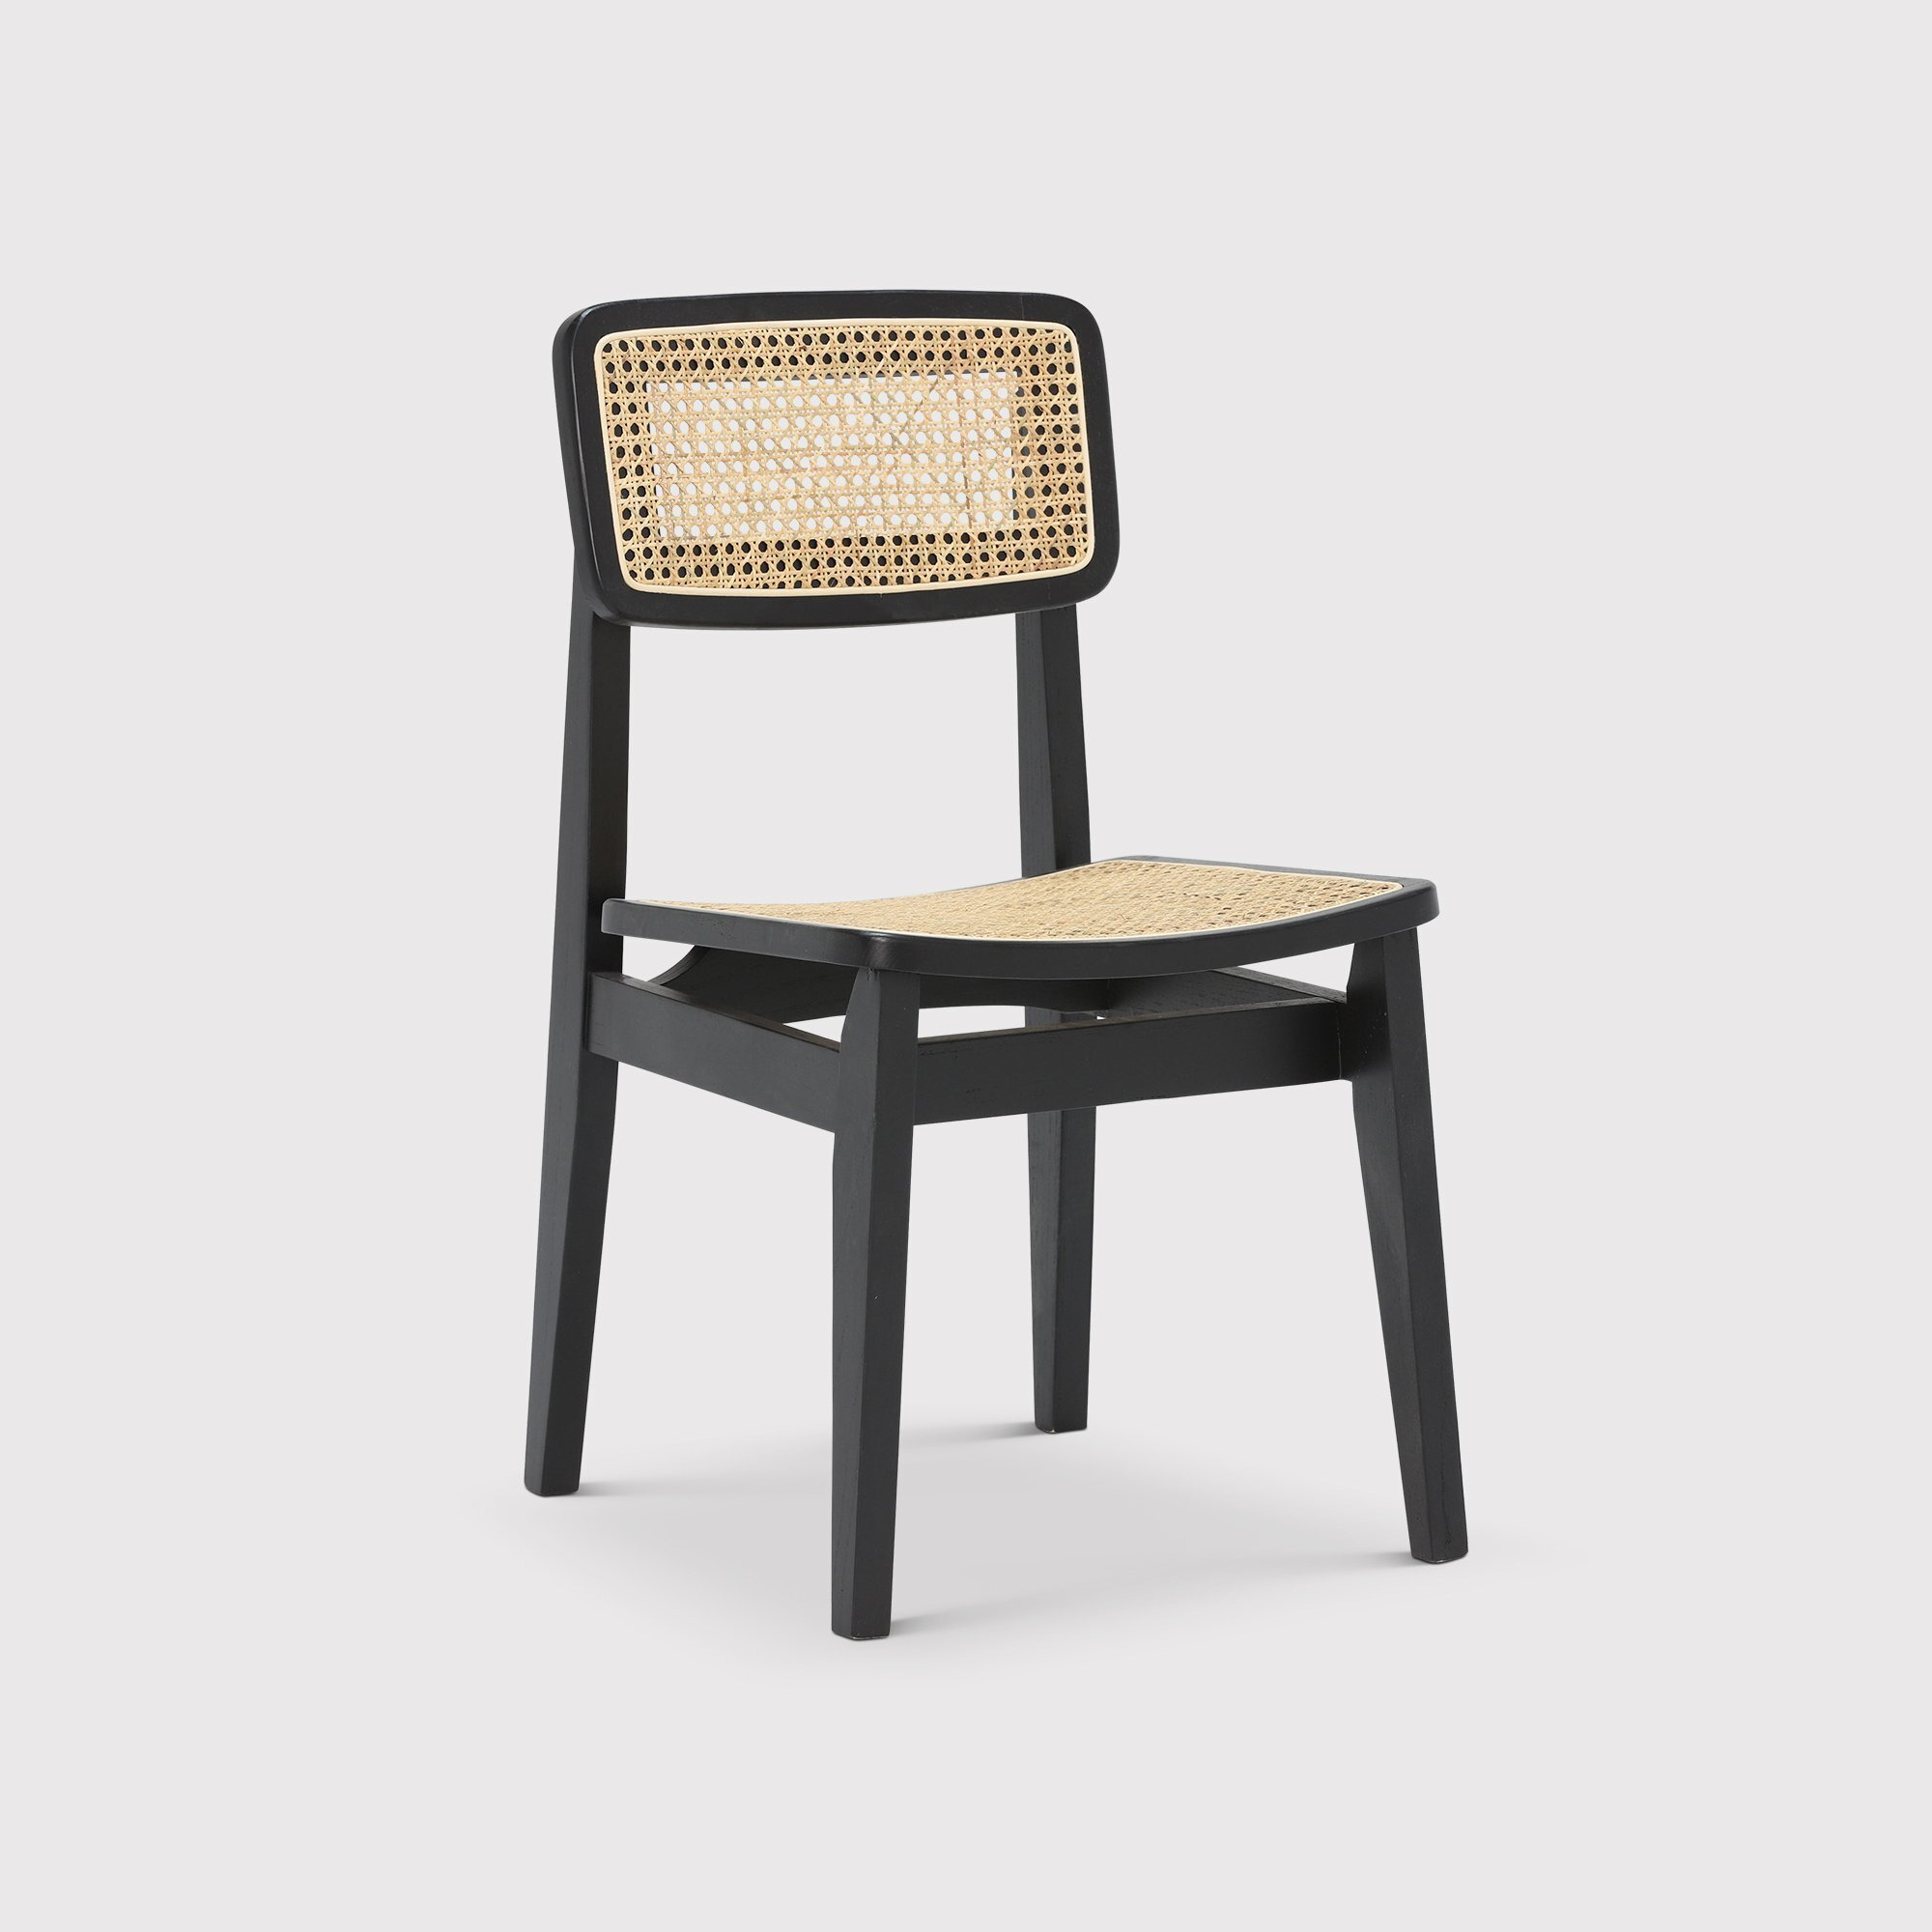 Malin Dining Chair, Black Rattan - Barker & Stonehouse - image 1